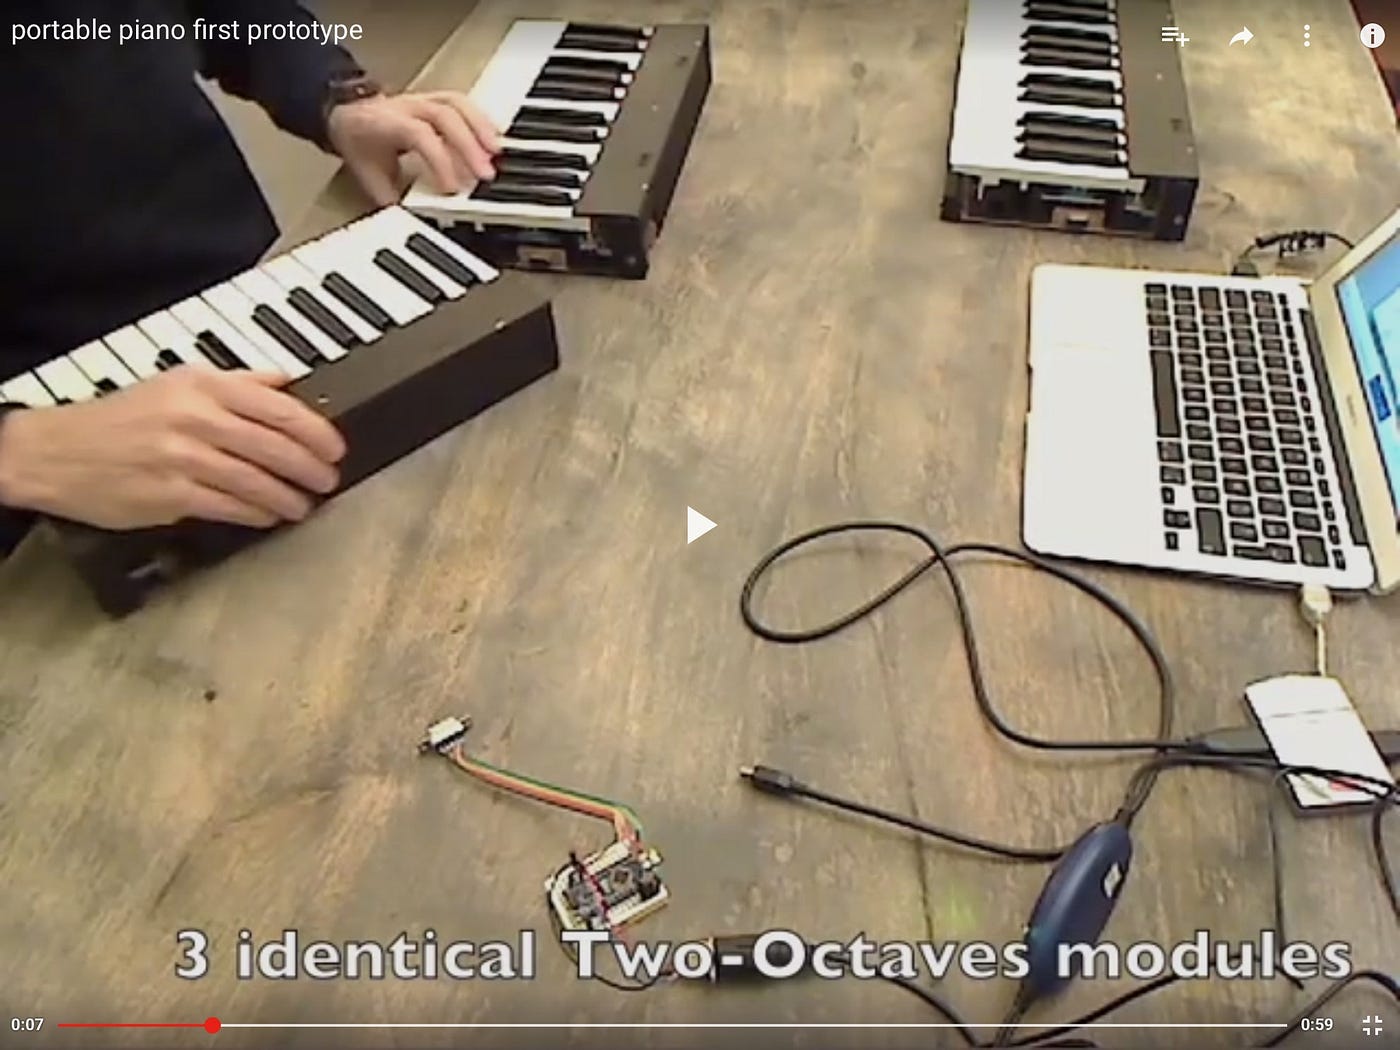 Why I built a portable piano prototype, by Piano de Voyage